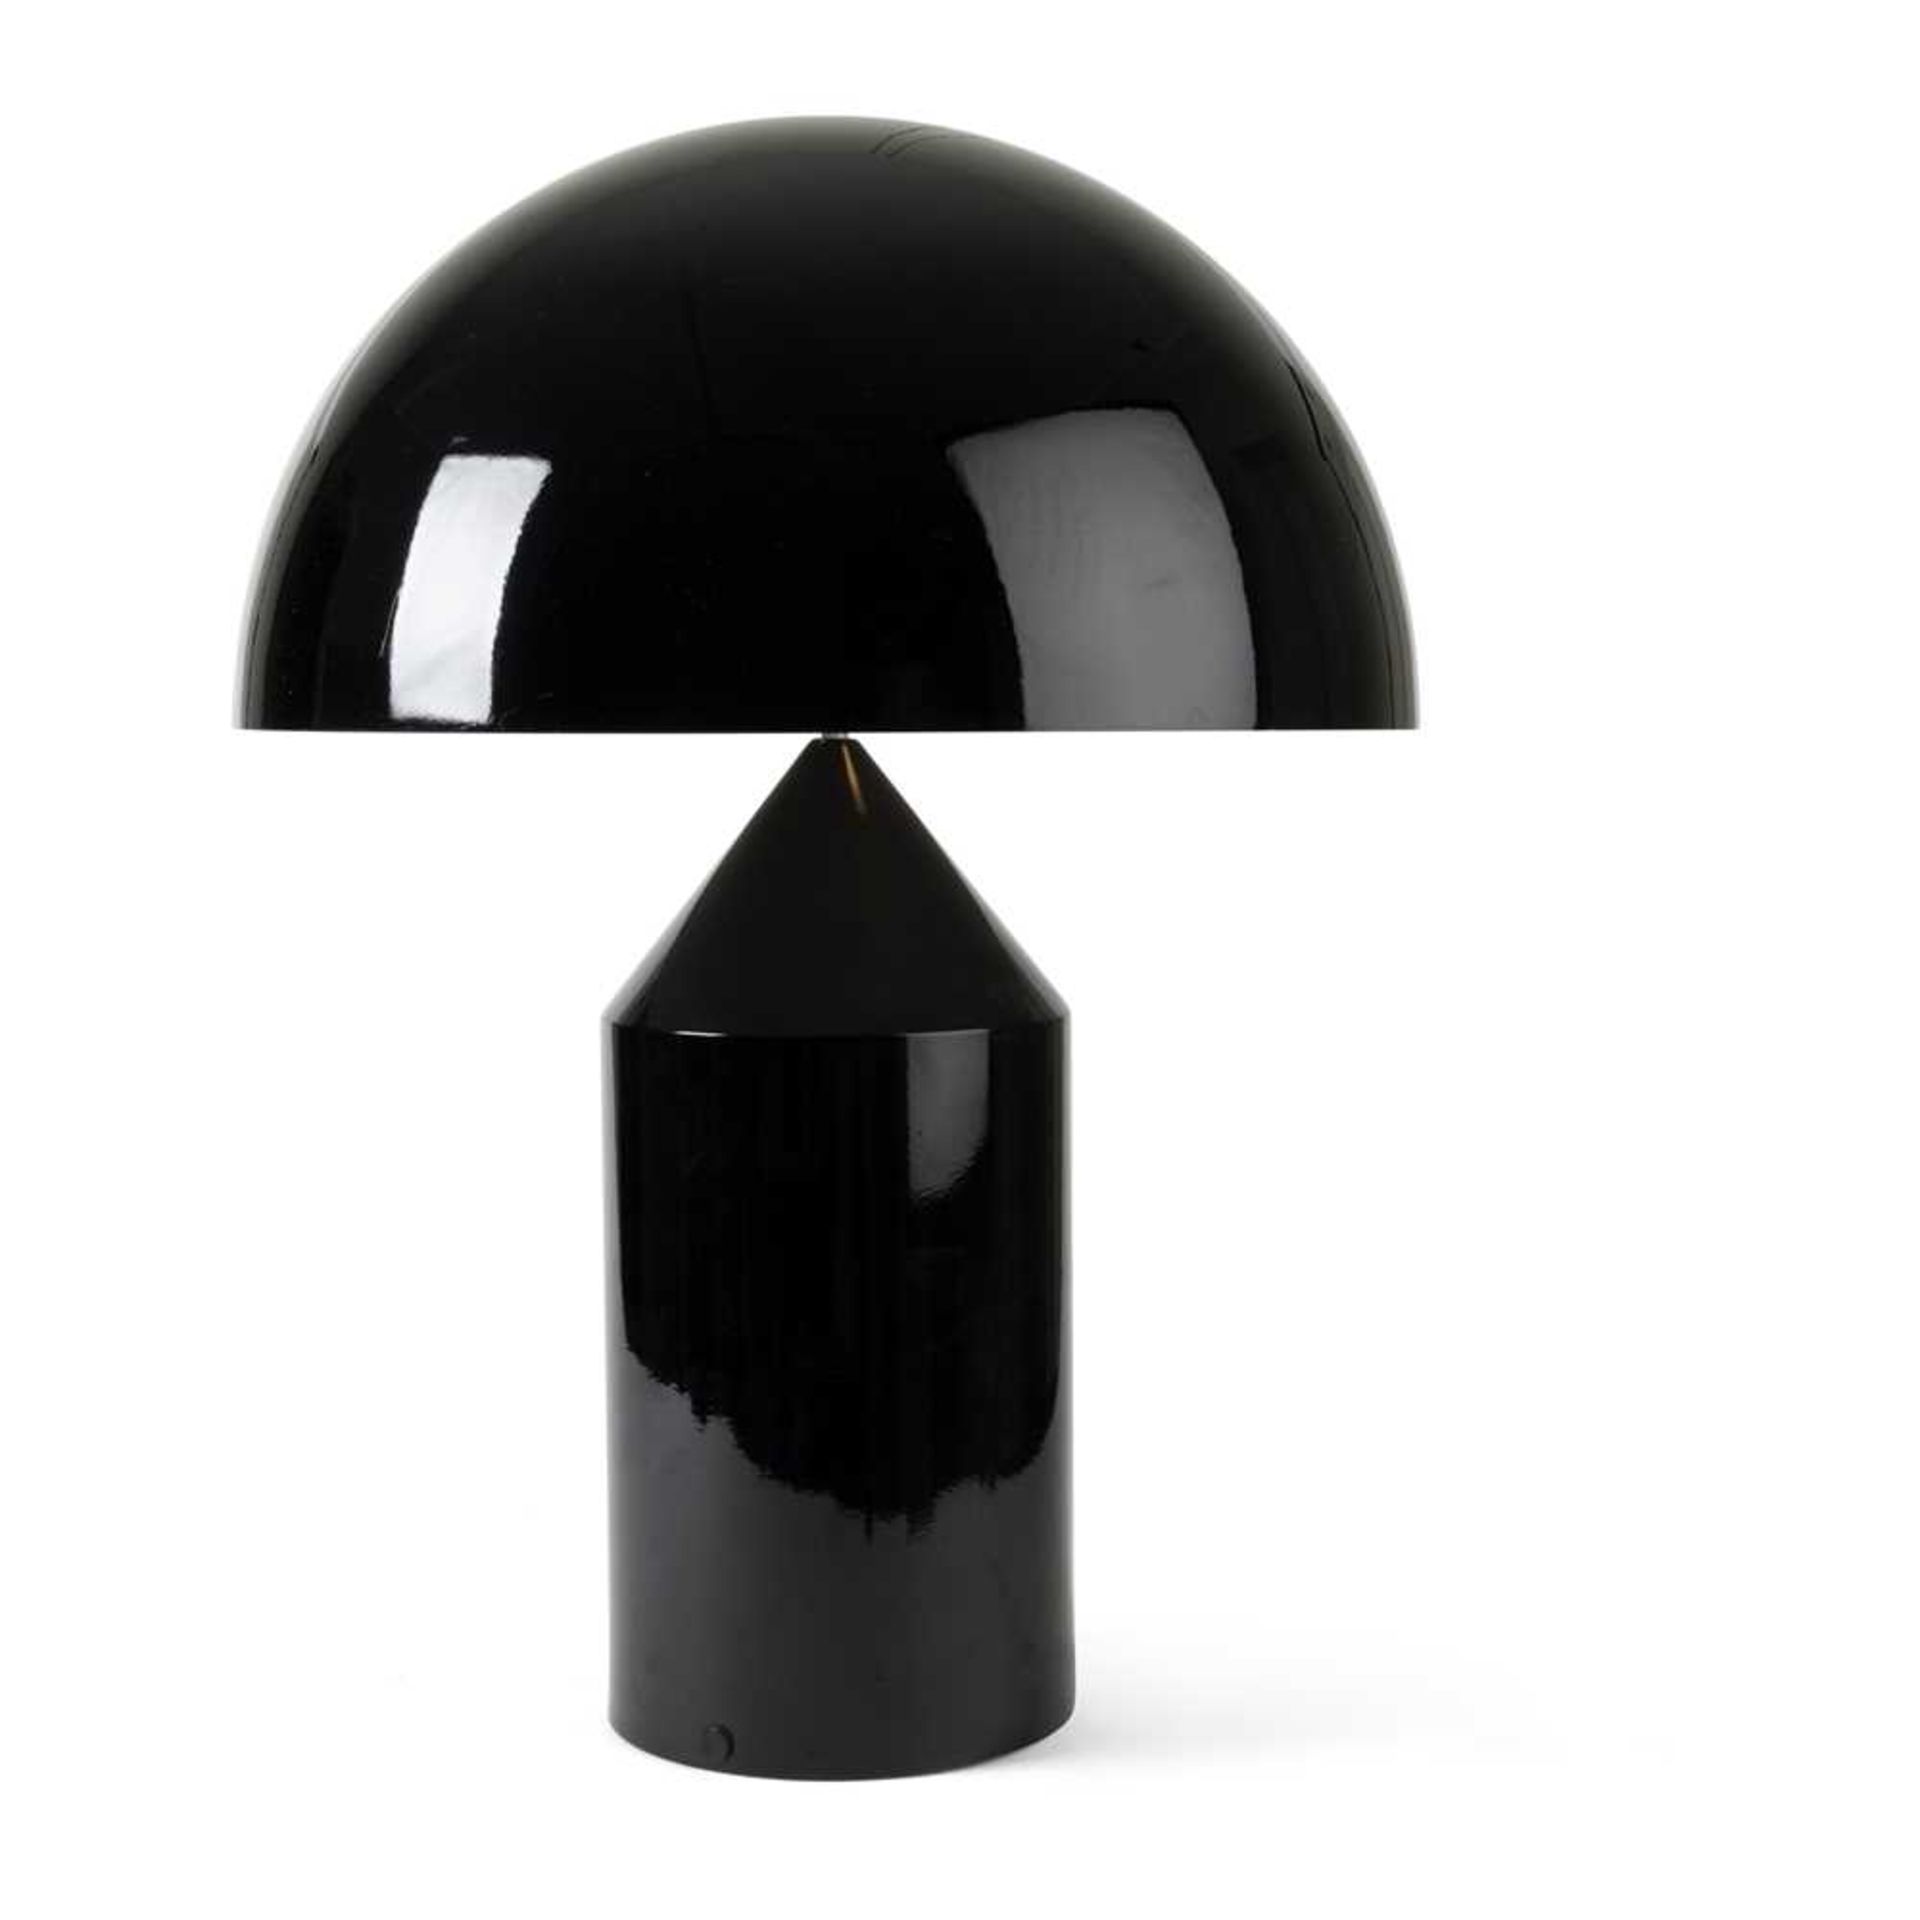 Vico Magistretti (Italian 1920-2006) for OLuce Atollo Table Lamp, designed 1977